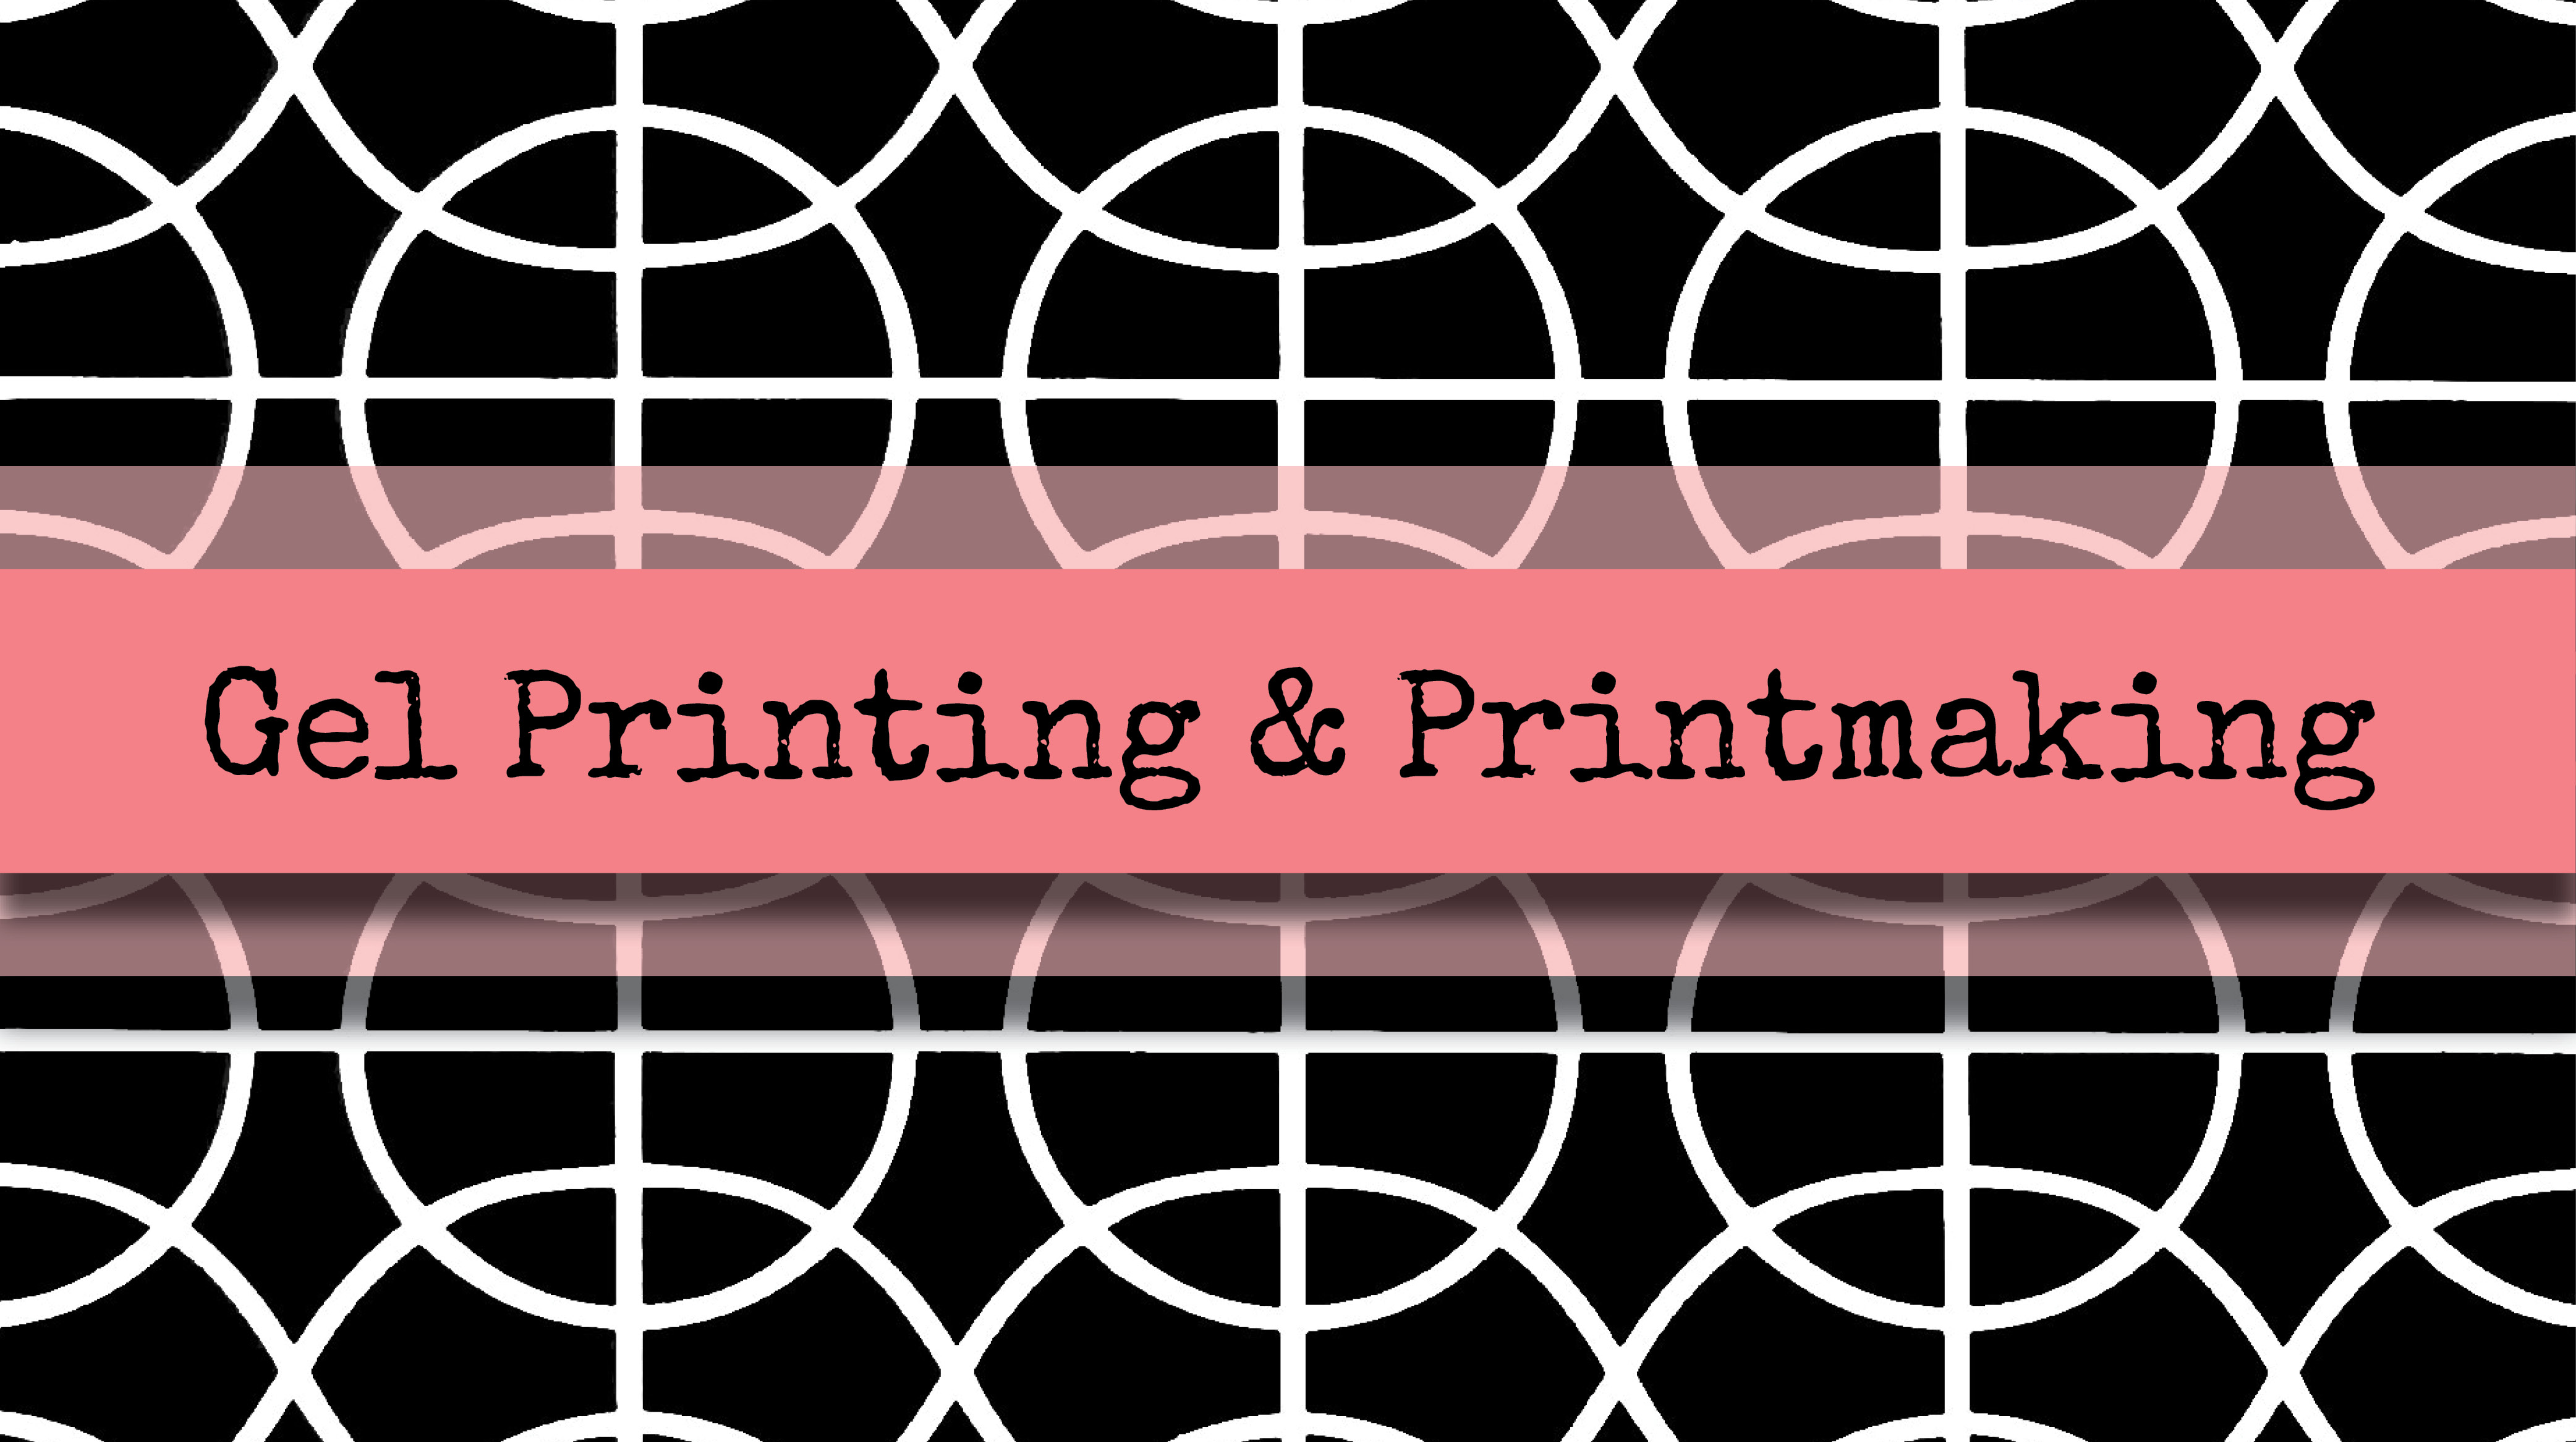 Class Supplies for Gel Printing & Printmaking Course - StencilGirl Studio